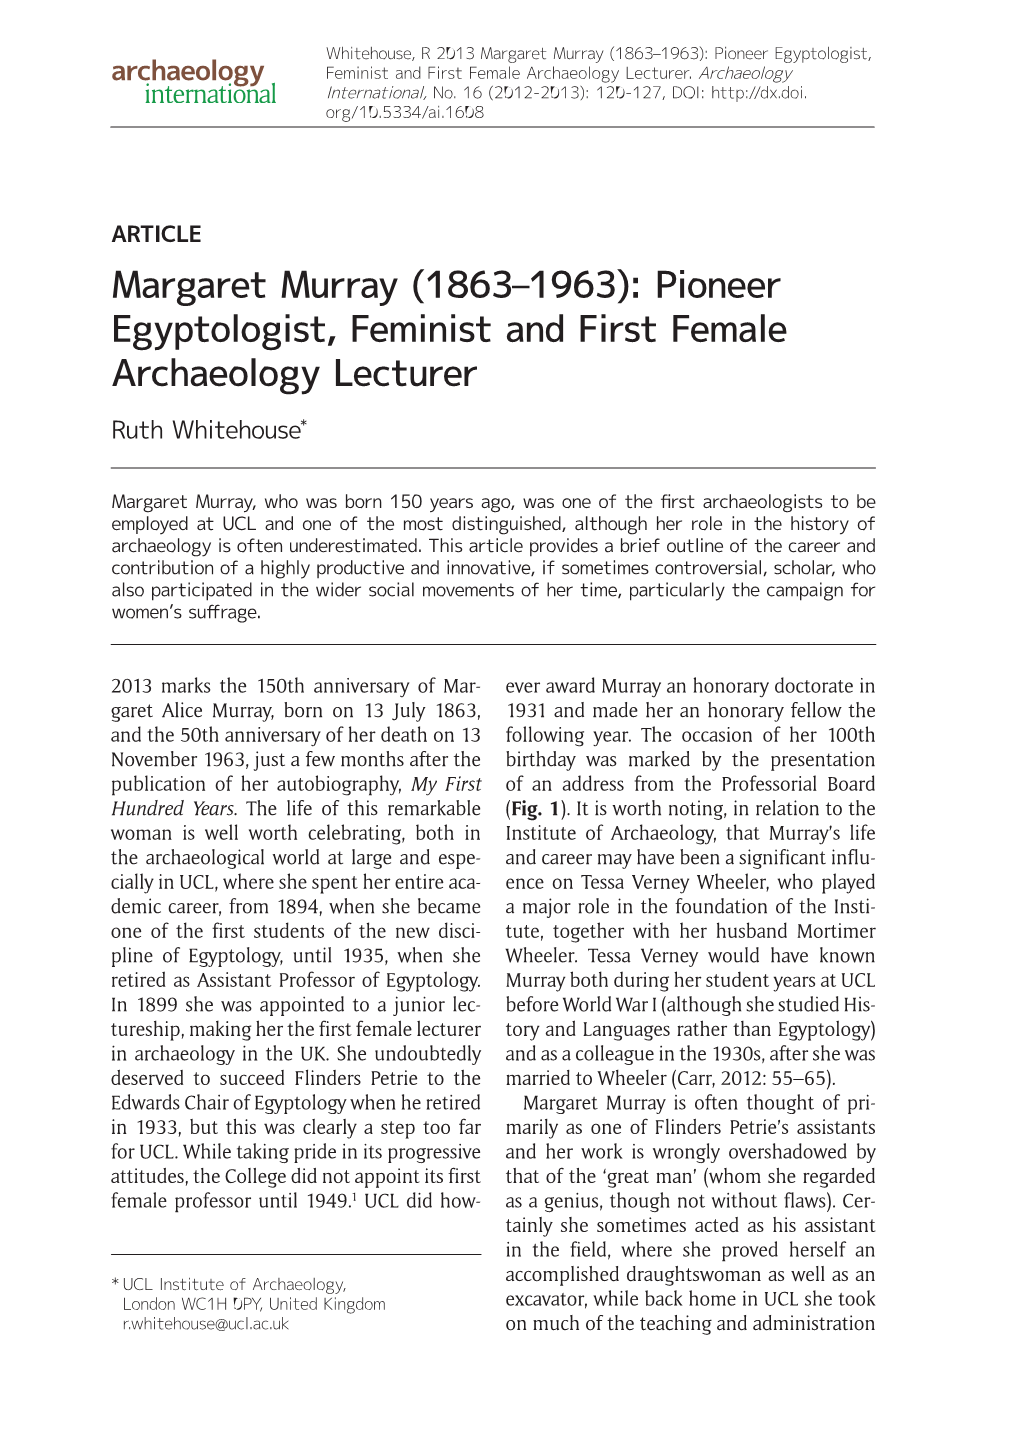 Margaret Murray (1863-1963): Pioneer Egyptologist, Feminist And